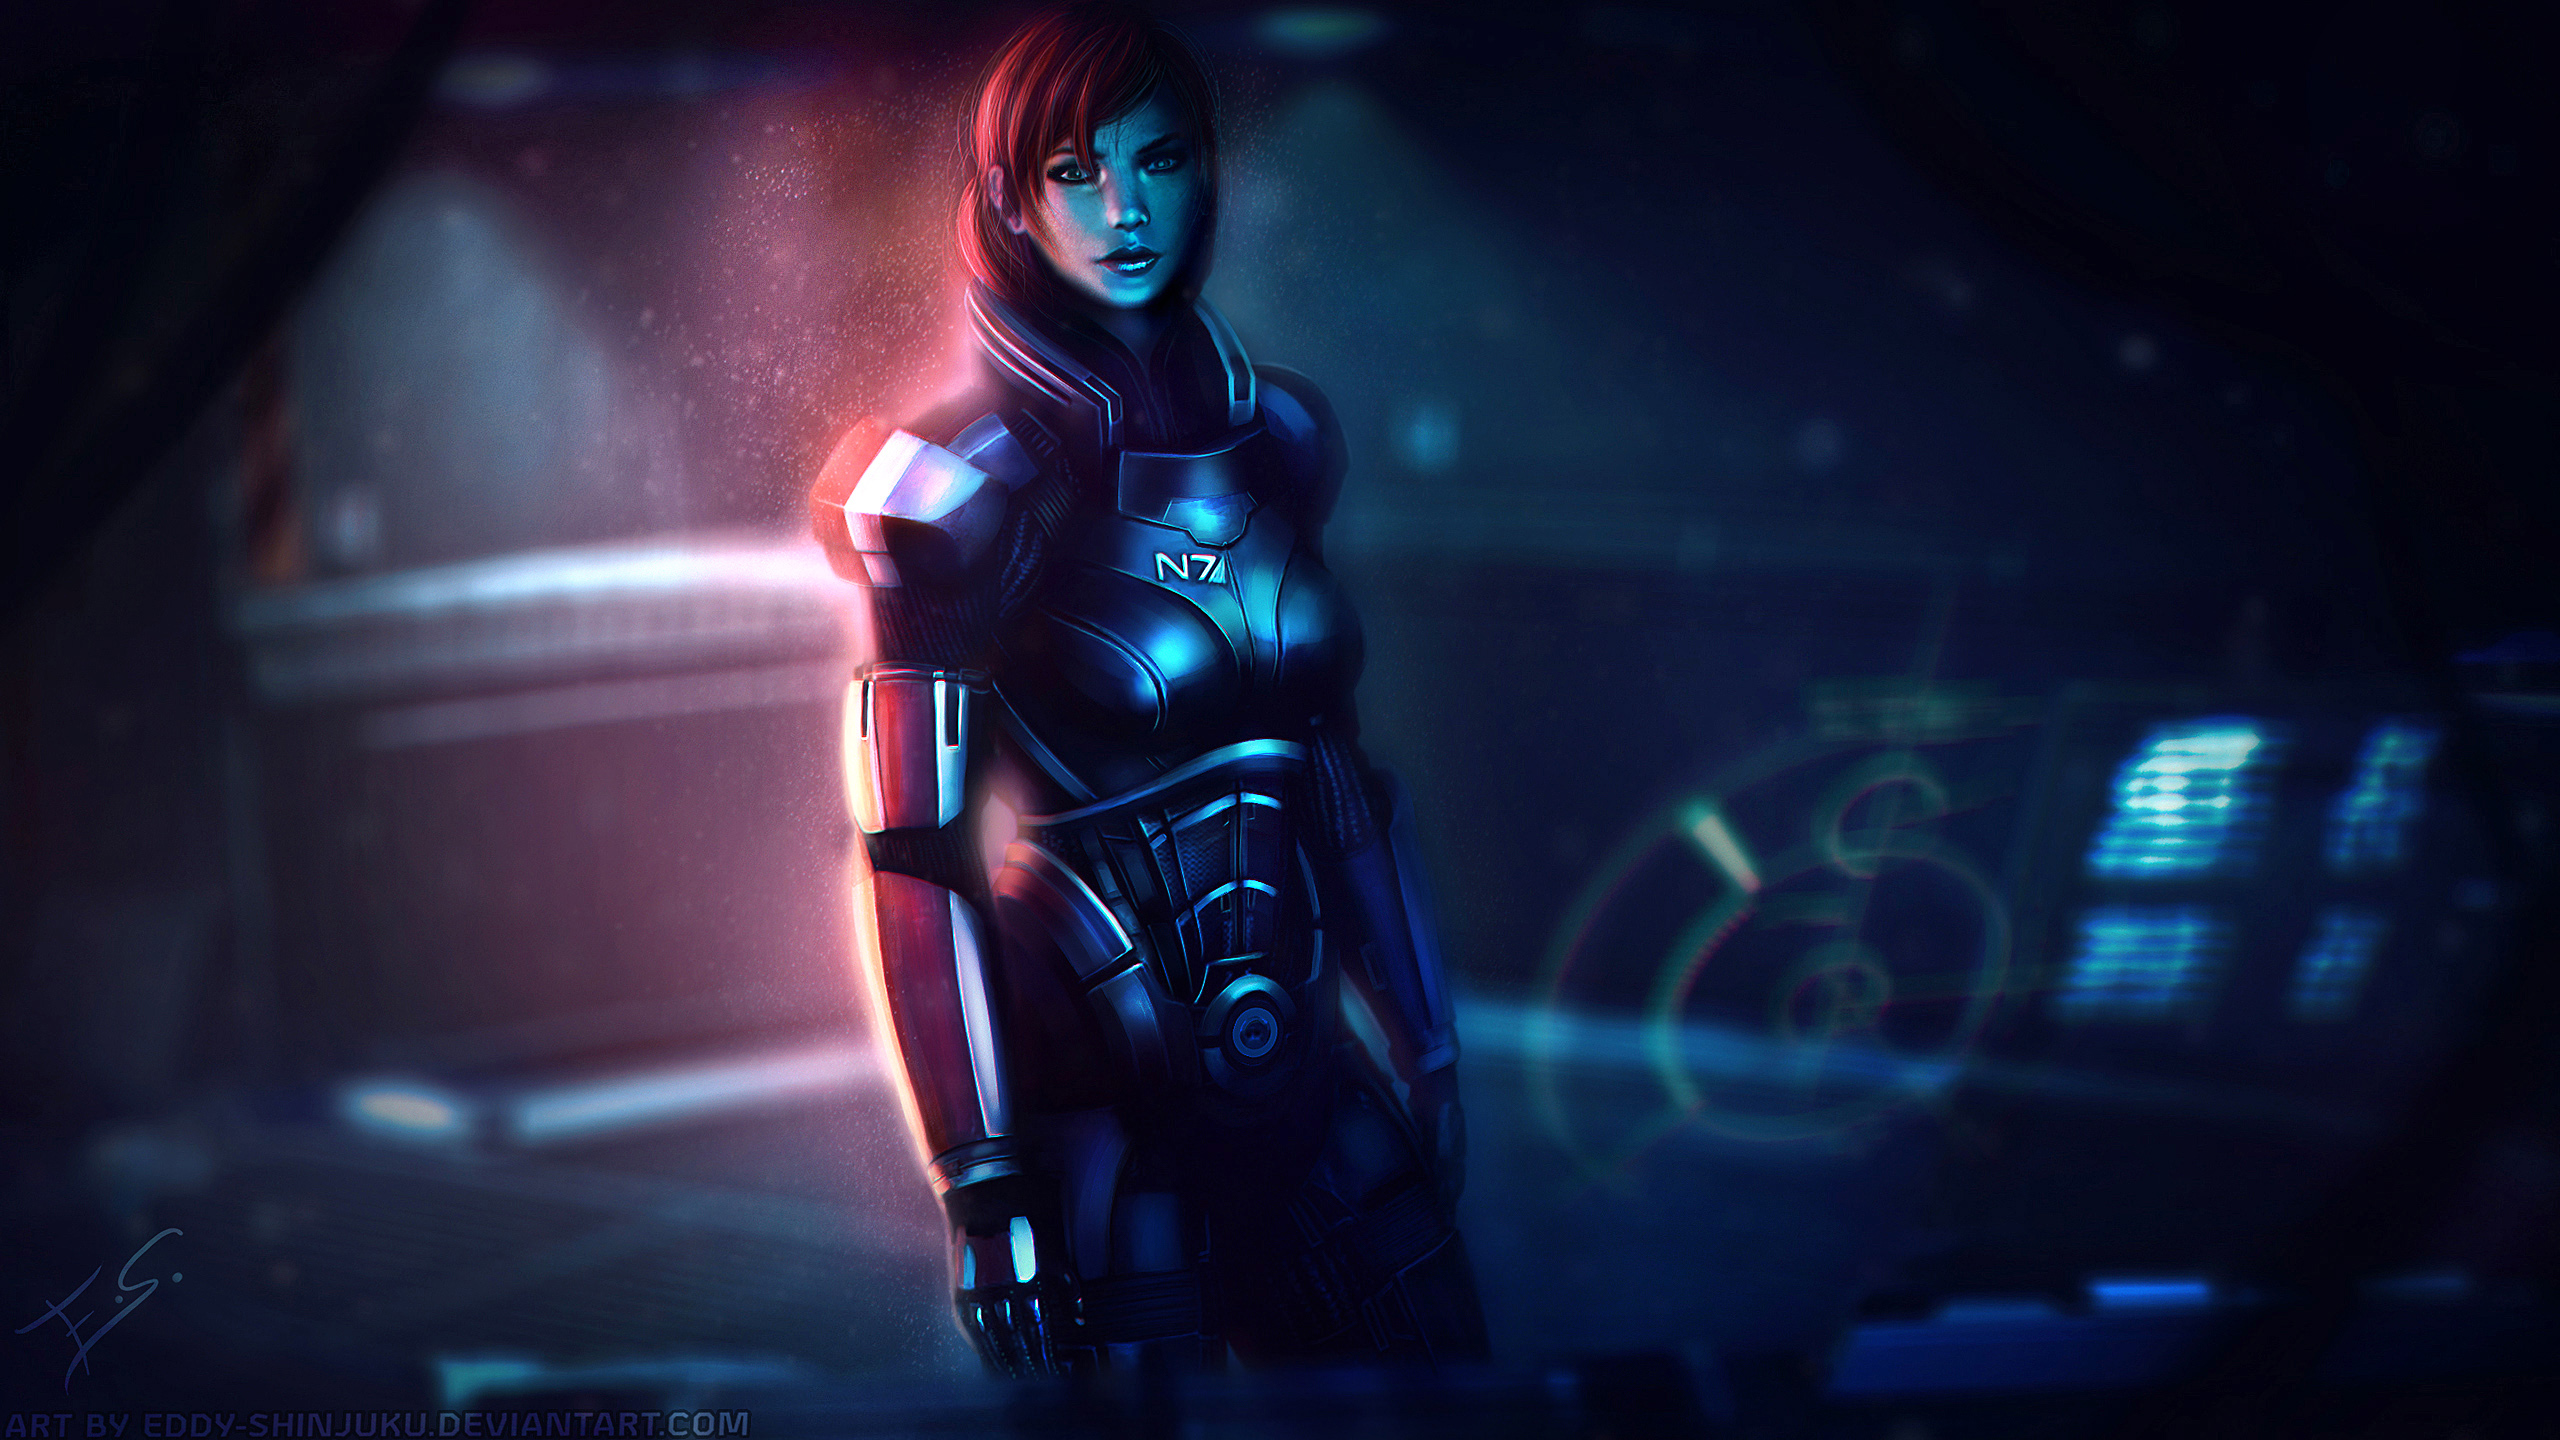 N7 Lady In Red Mass Effect By Eddy Shinjuku